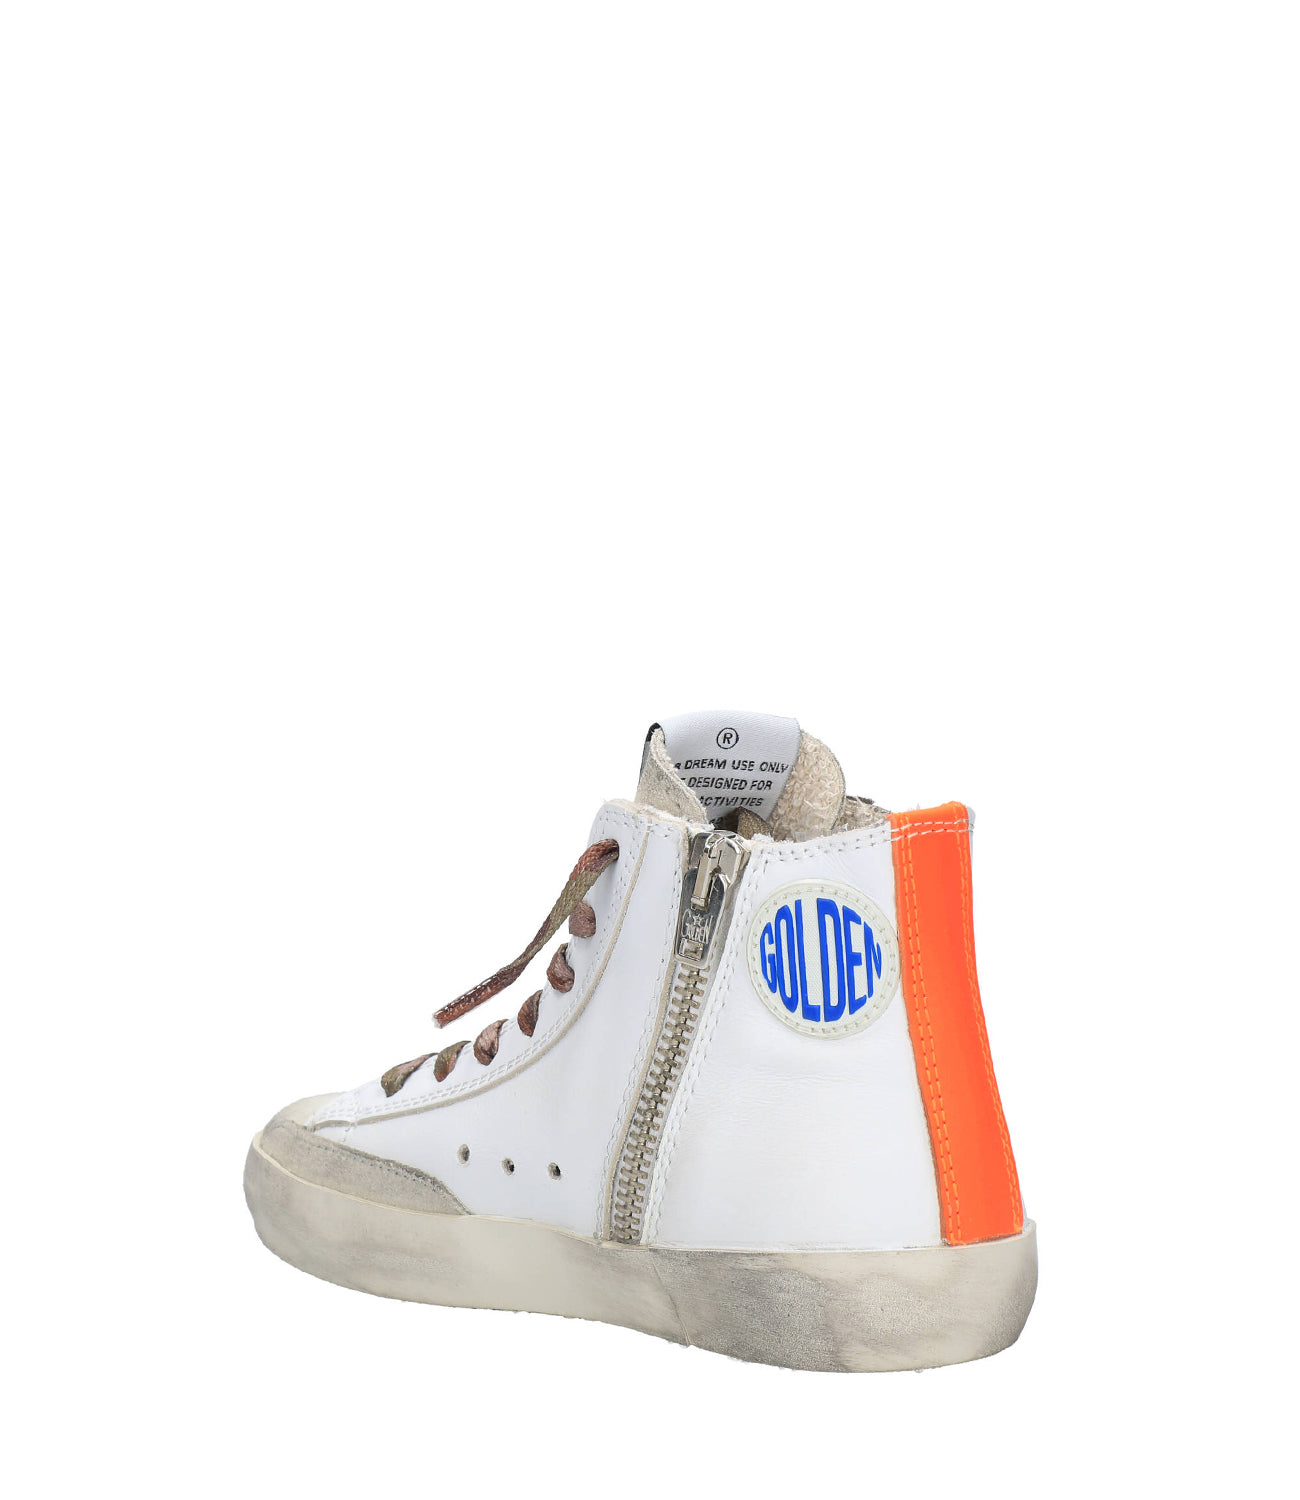 Sneakers Francy Bianca, Bluette e Arancio